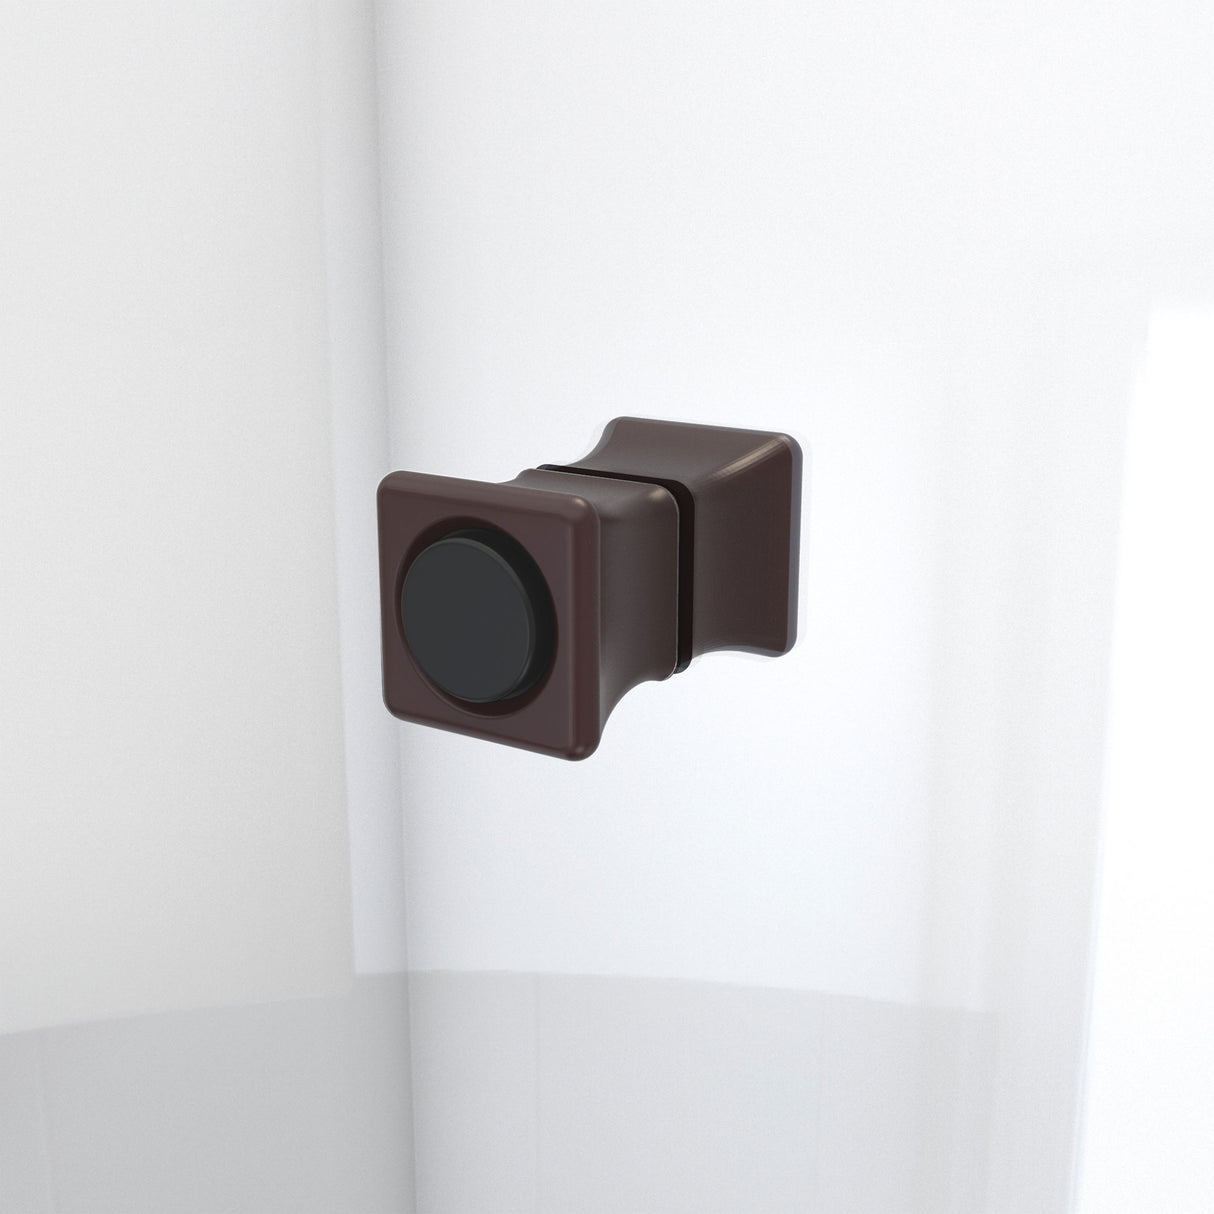 DreamLine Aqua-Q Fold 32 in. D x 32 in. W x 74 3/4 in. H Frameless Bi-Fold Shower Door in Oil Rubbed Bronze with Biscuit Base Kit